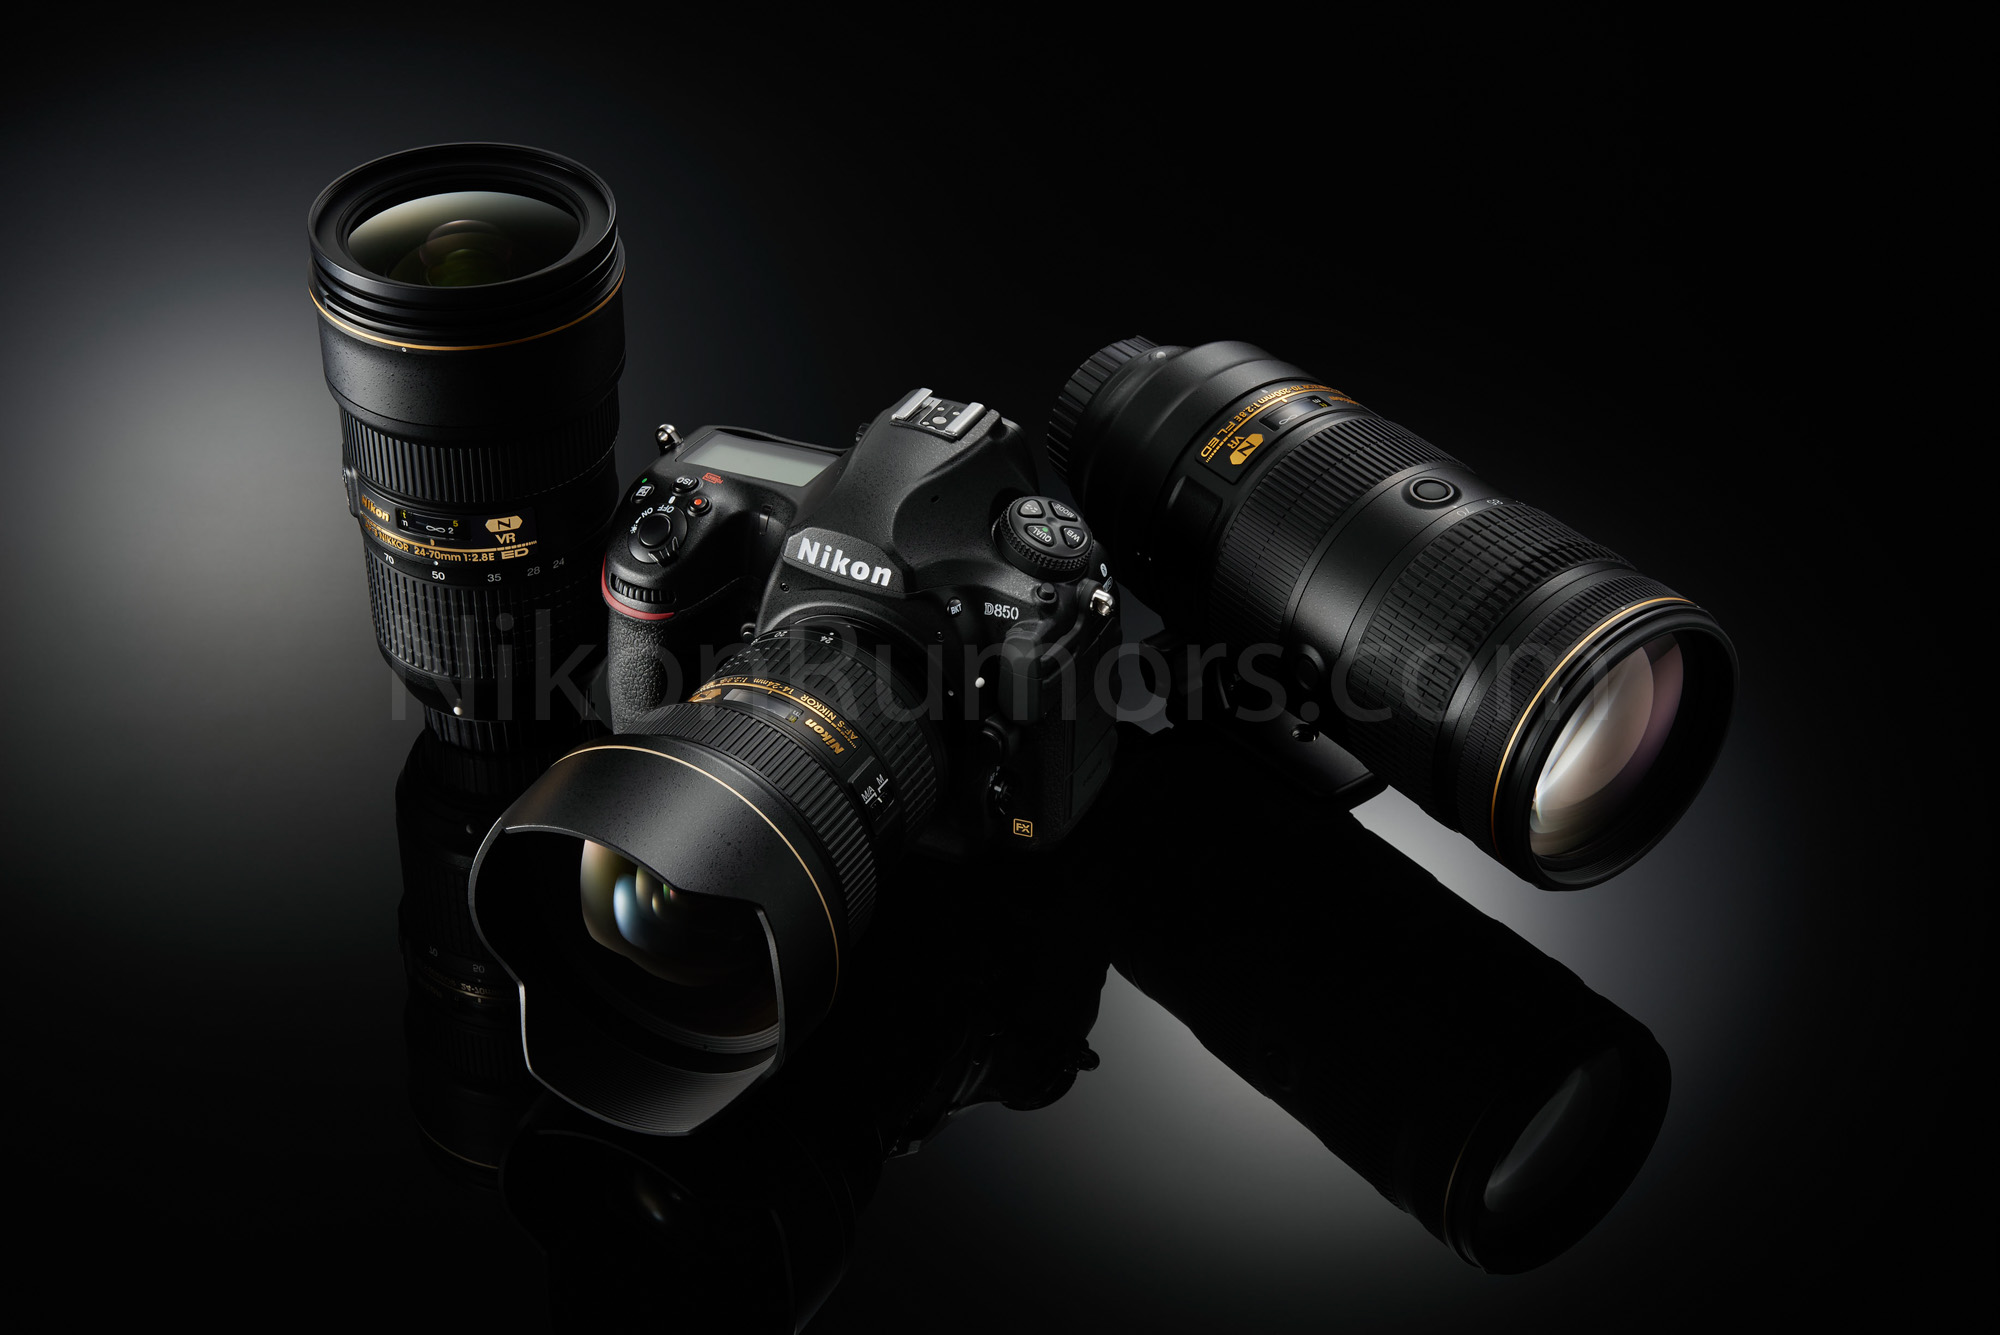 Additional Nikon D850 coverage - Nikon Rumors